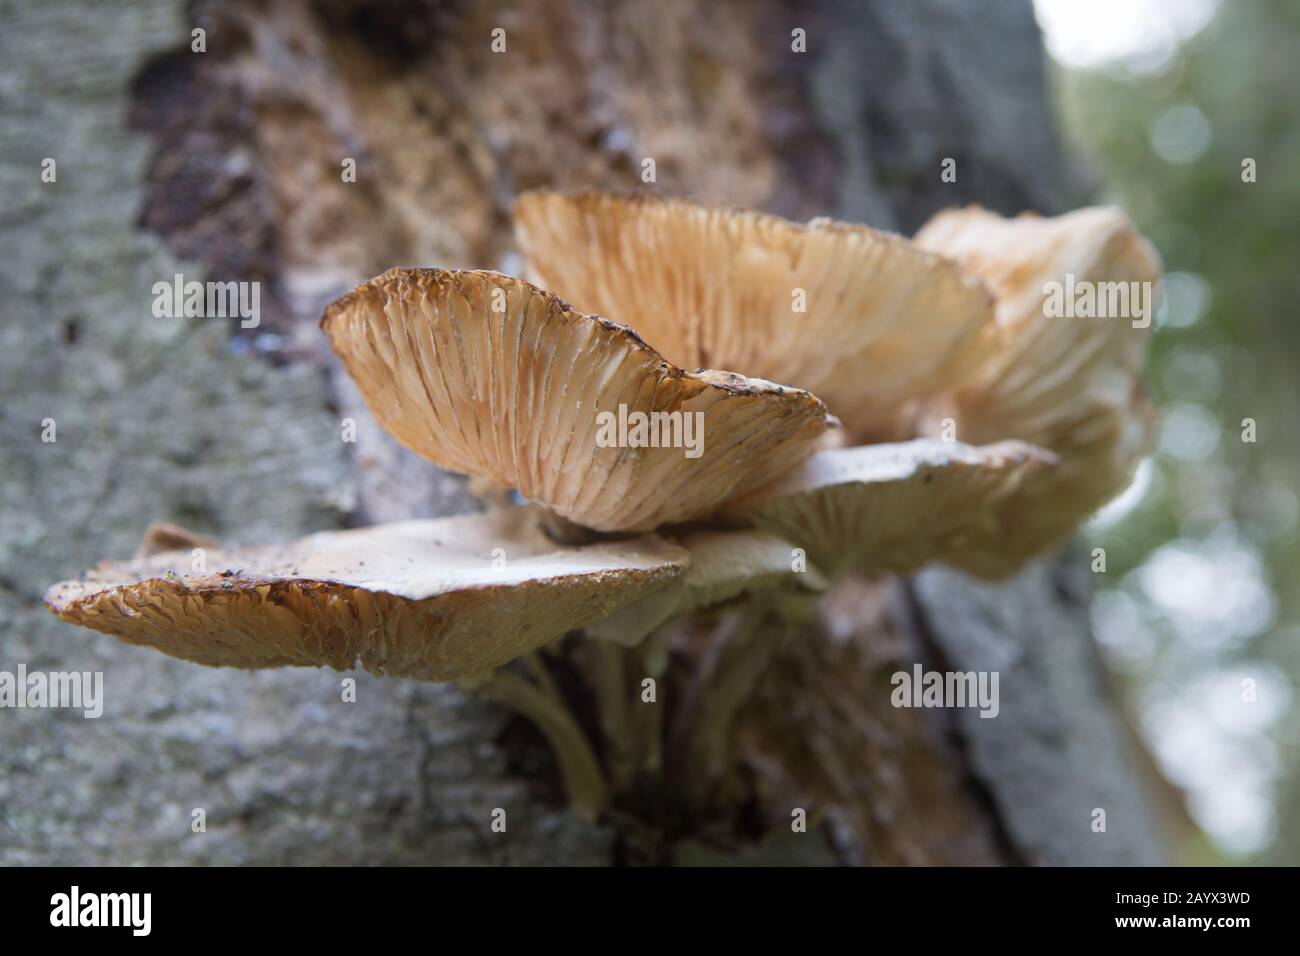 Cluster of Oyster mushrooms (Pleurotus ostreatus) growing on tree bark, Bishops Wood, St Andrews, Fife, Scotland. Stock Photo